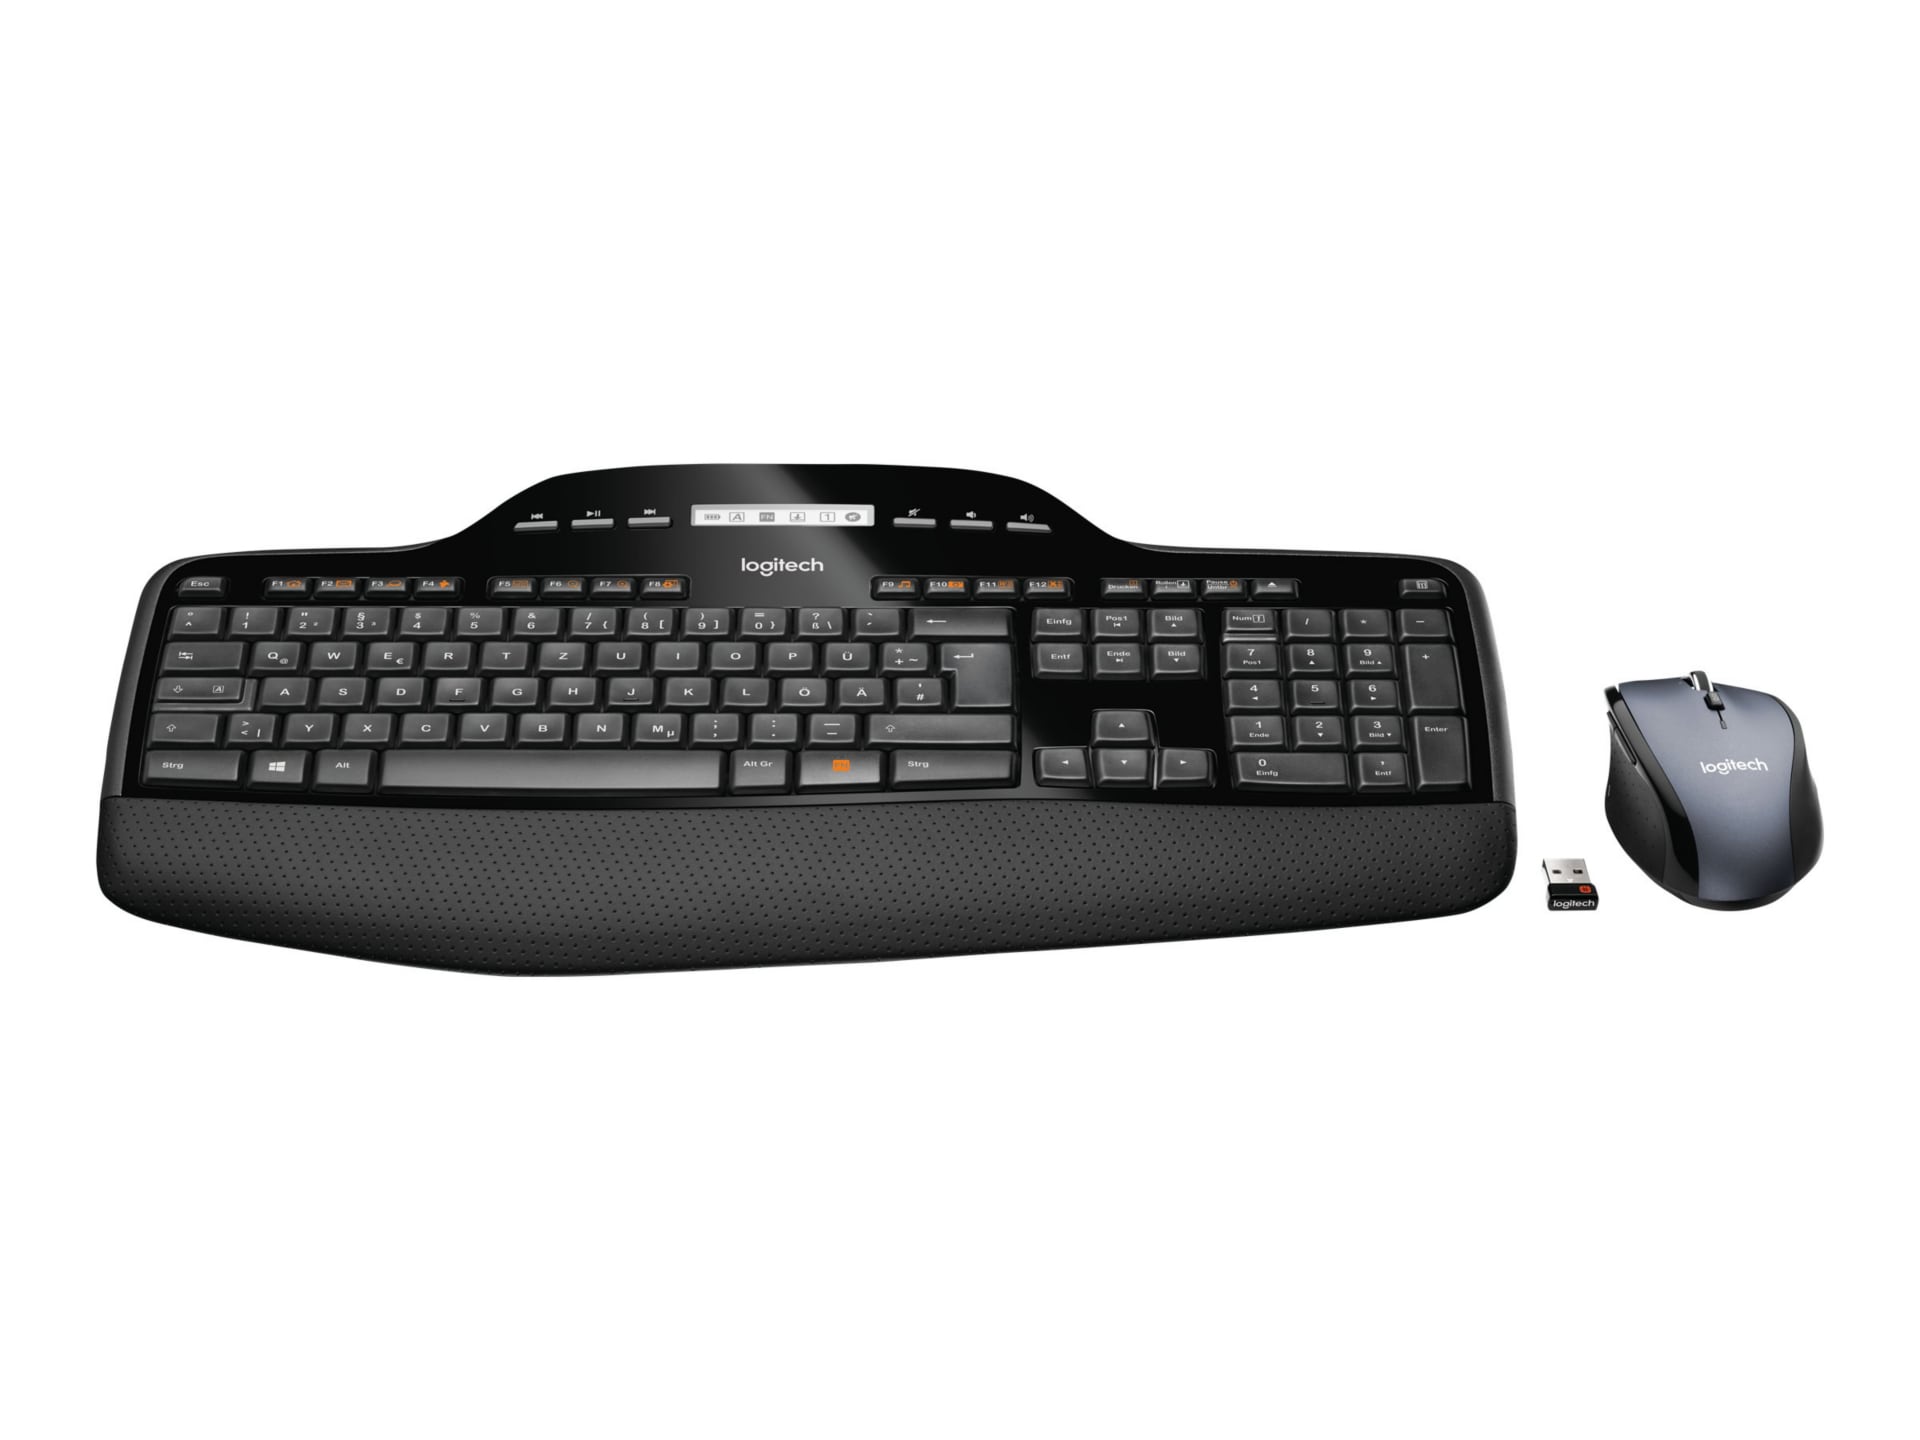 Logitech Wireless Desktop MK710 - keyboard and mouse set - English -  920-002416 - Keyboard & Mouse Bundles 